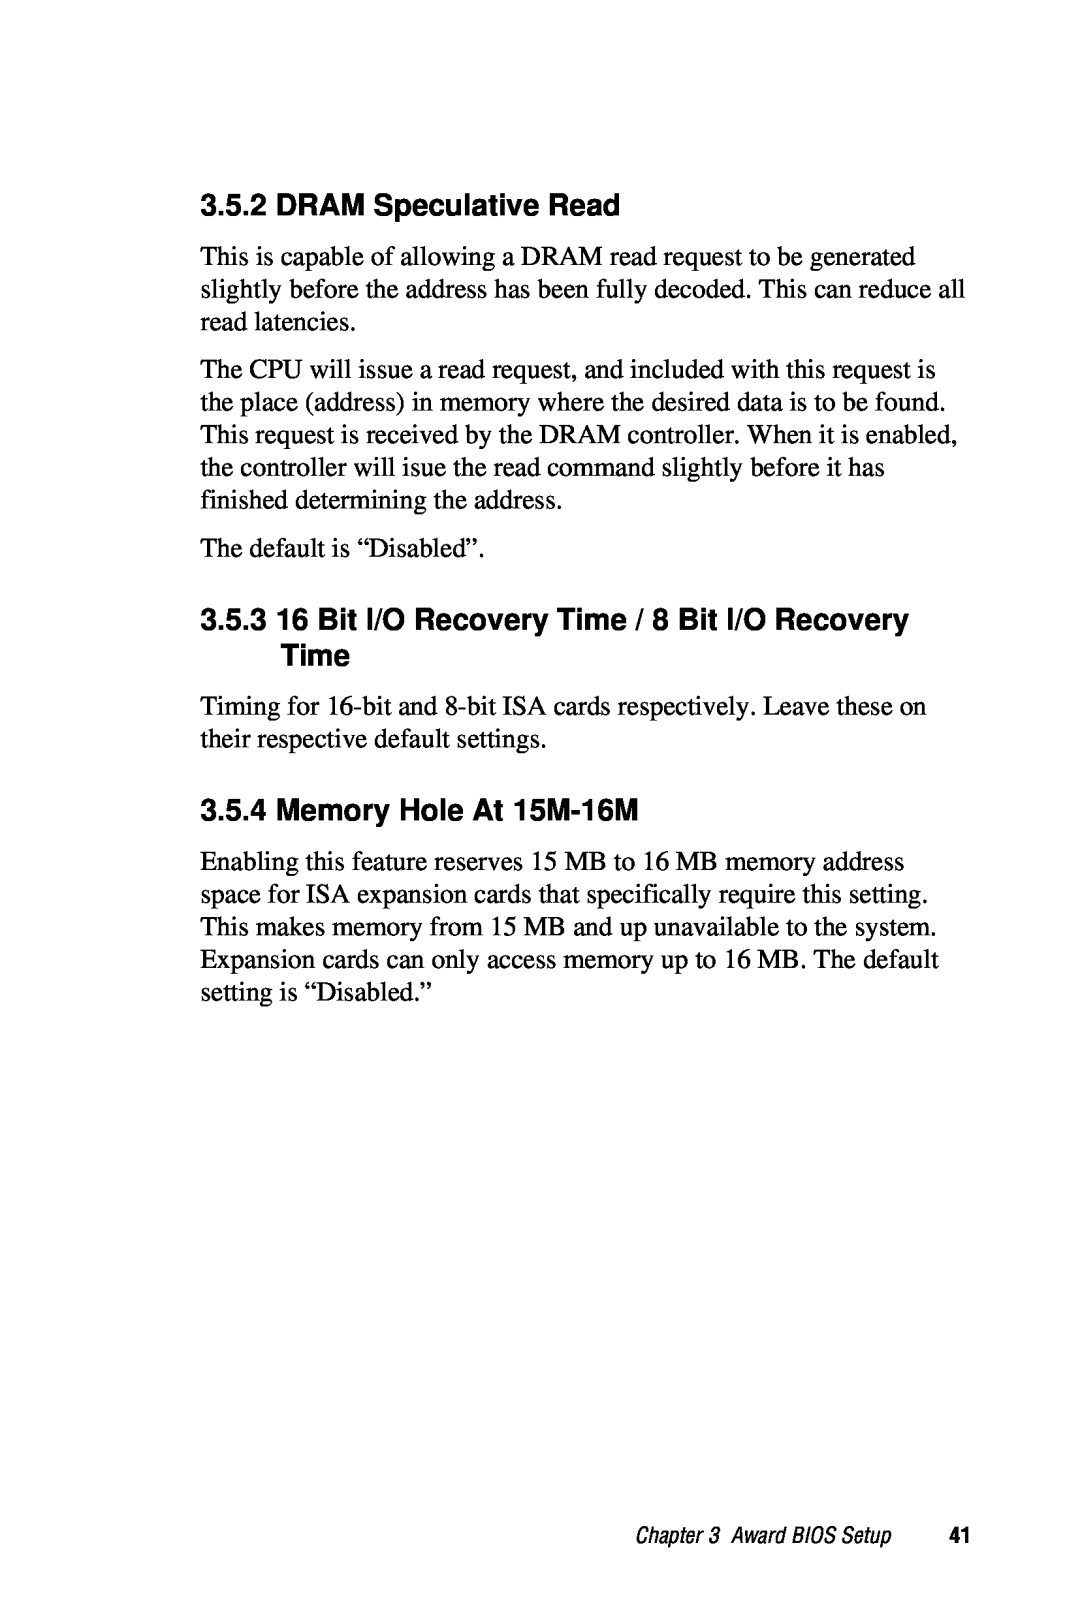 Advantech PCA-6359 DRAM Speculative Read, 3.5.3 16 Bit I/O Recovery Time / 8 Bit I/O Recovery Time, Memory Hole At 15M-16M 